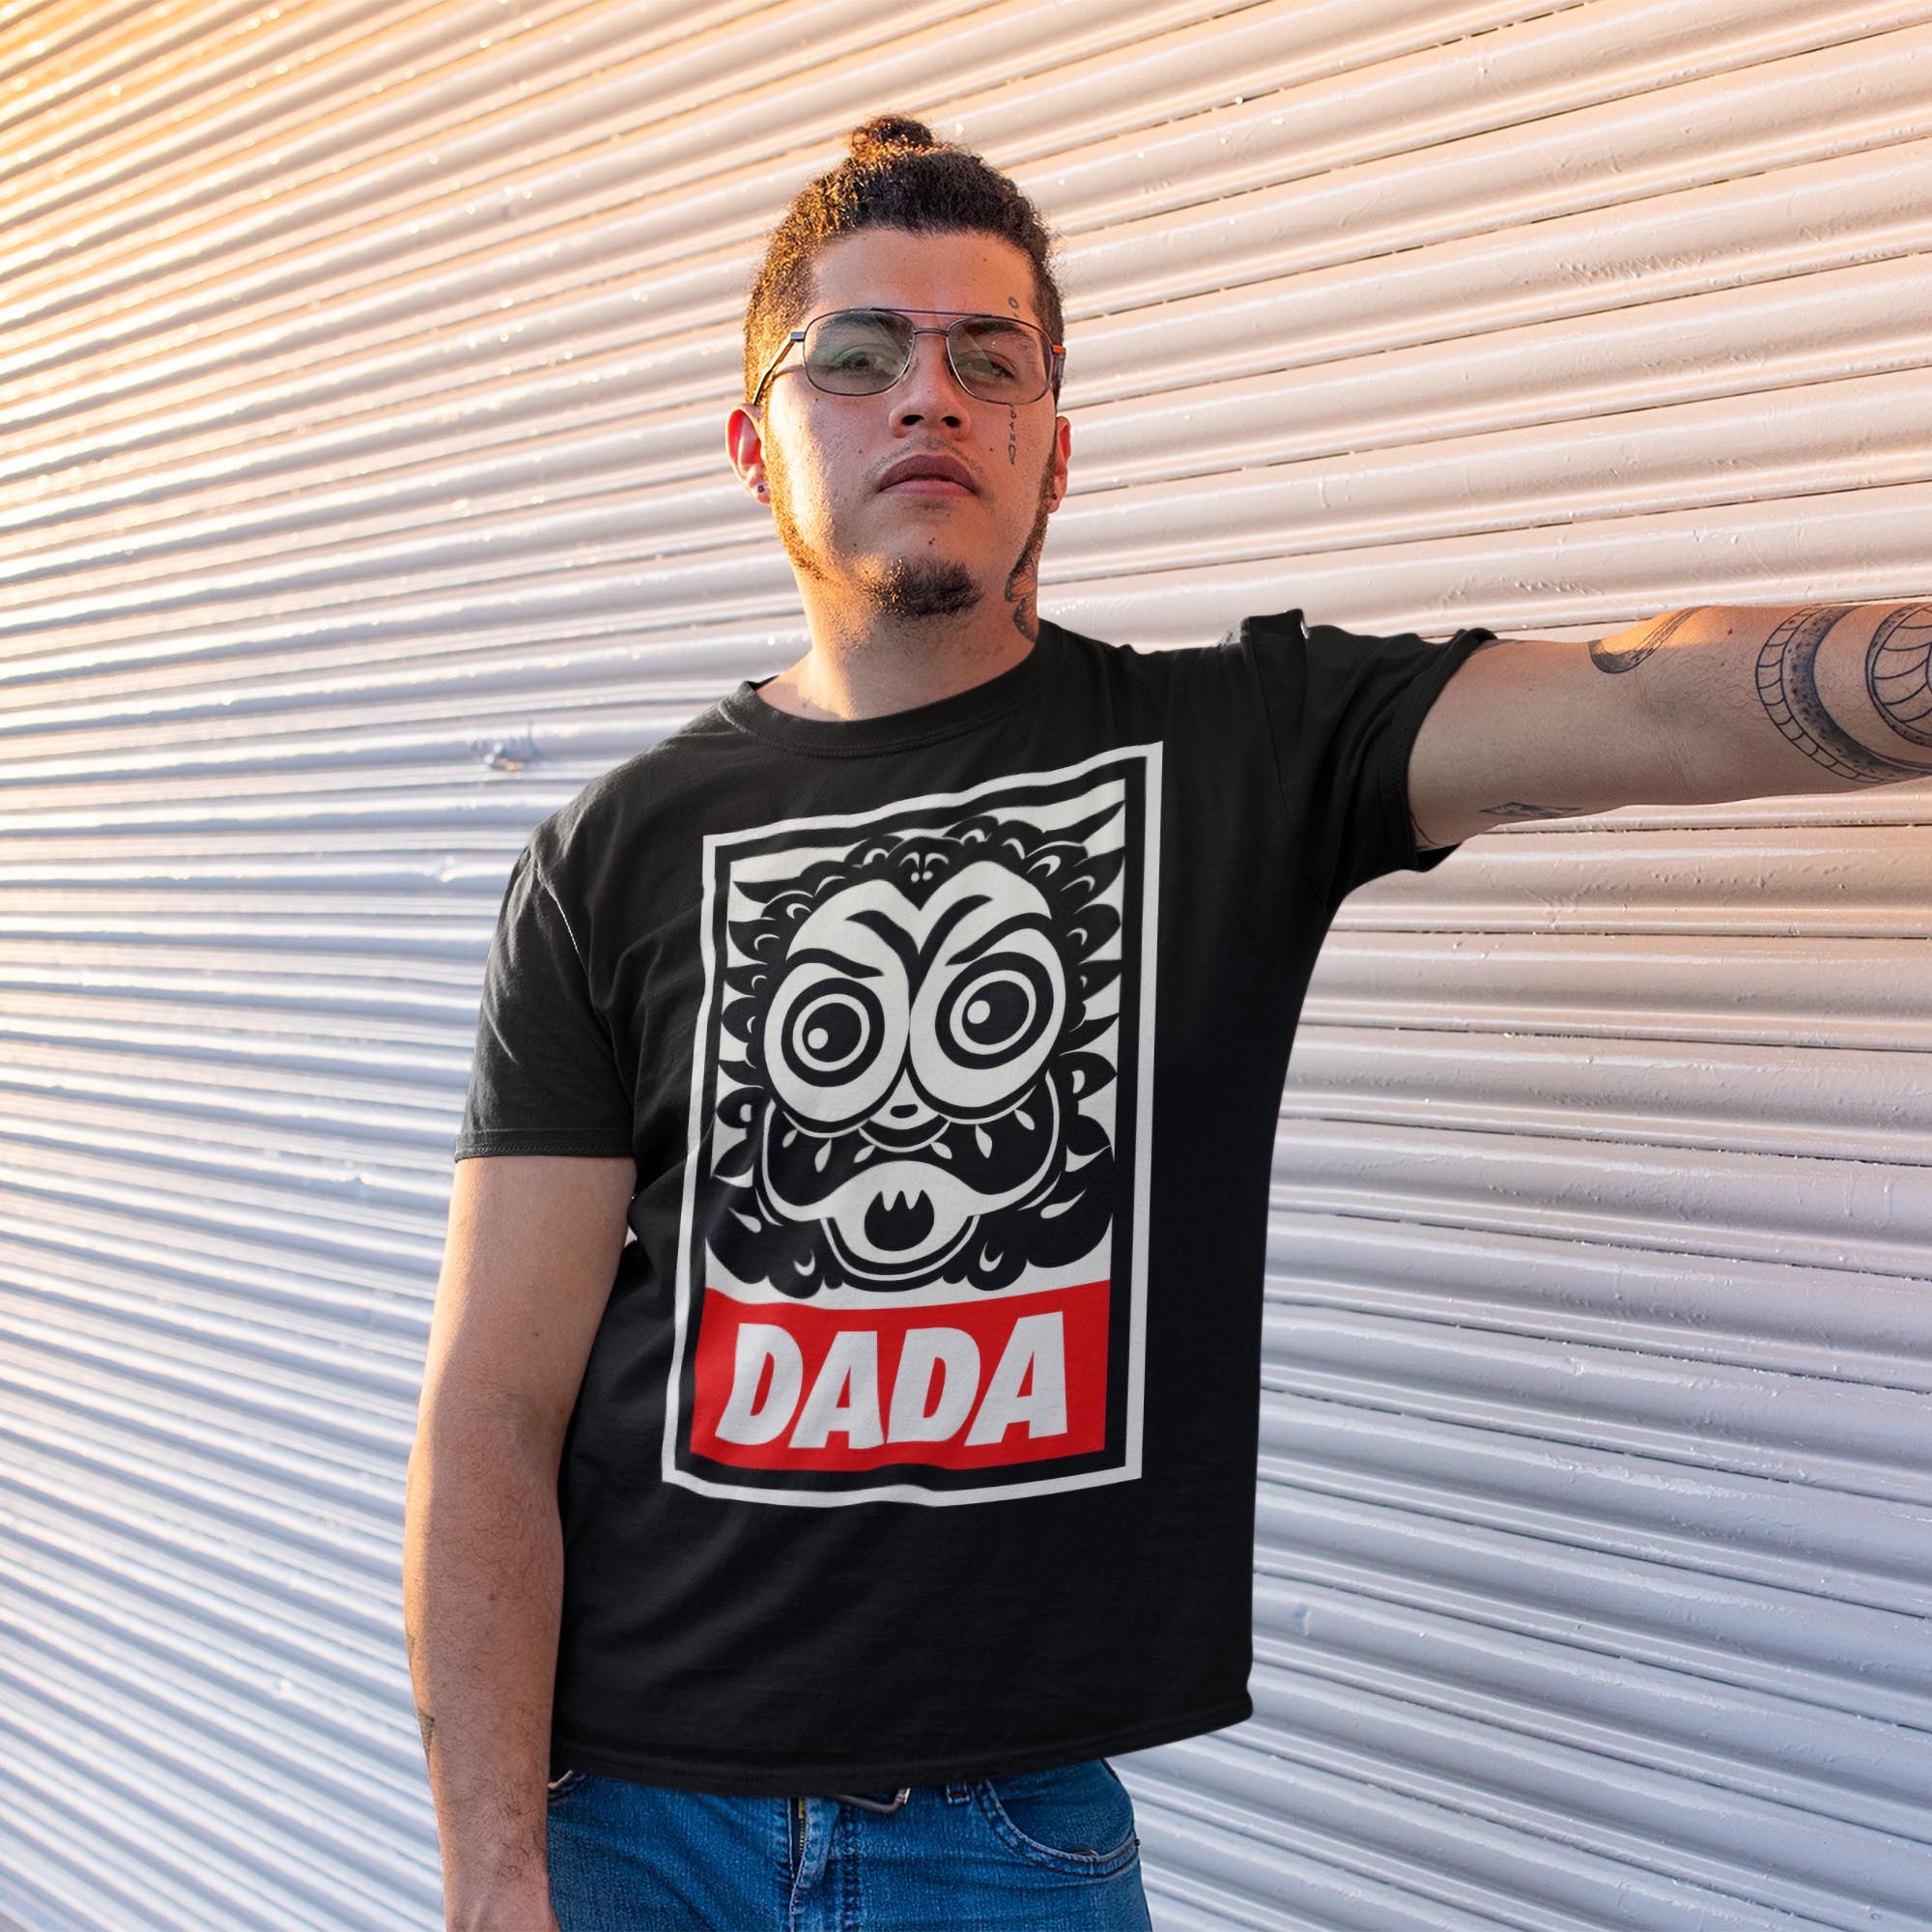 T-Shirts Obey DADA | Andre the Giant Propaganda | Non-Conformity Streetwear | Surrealism Avant Garde Graphic Art T-Shirt